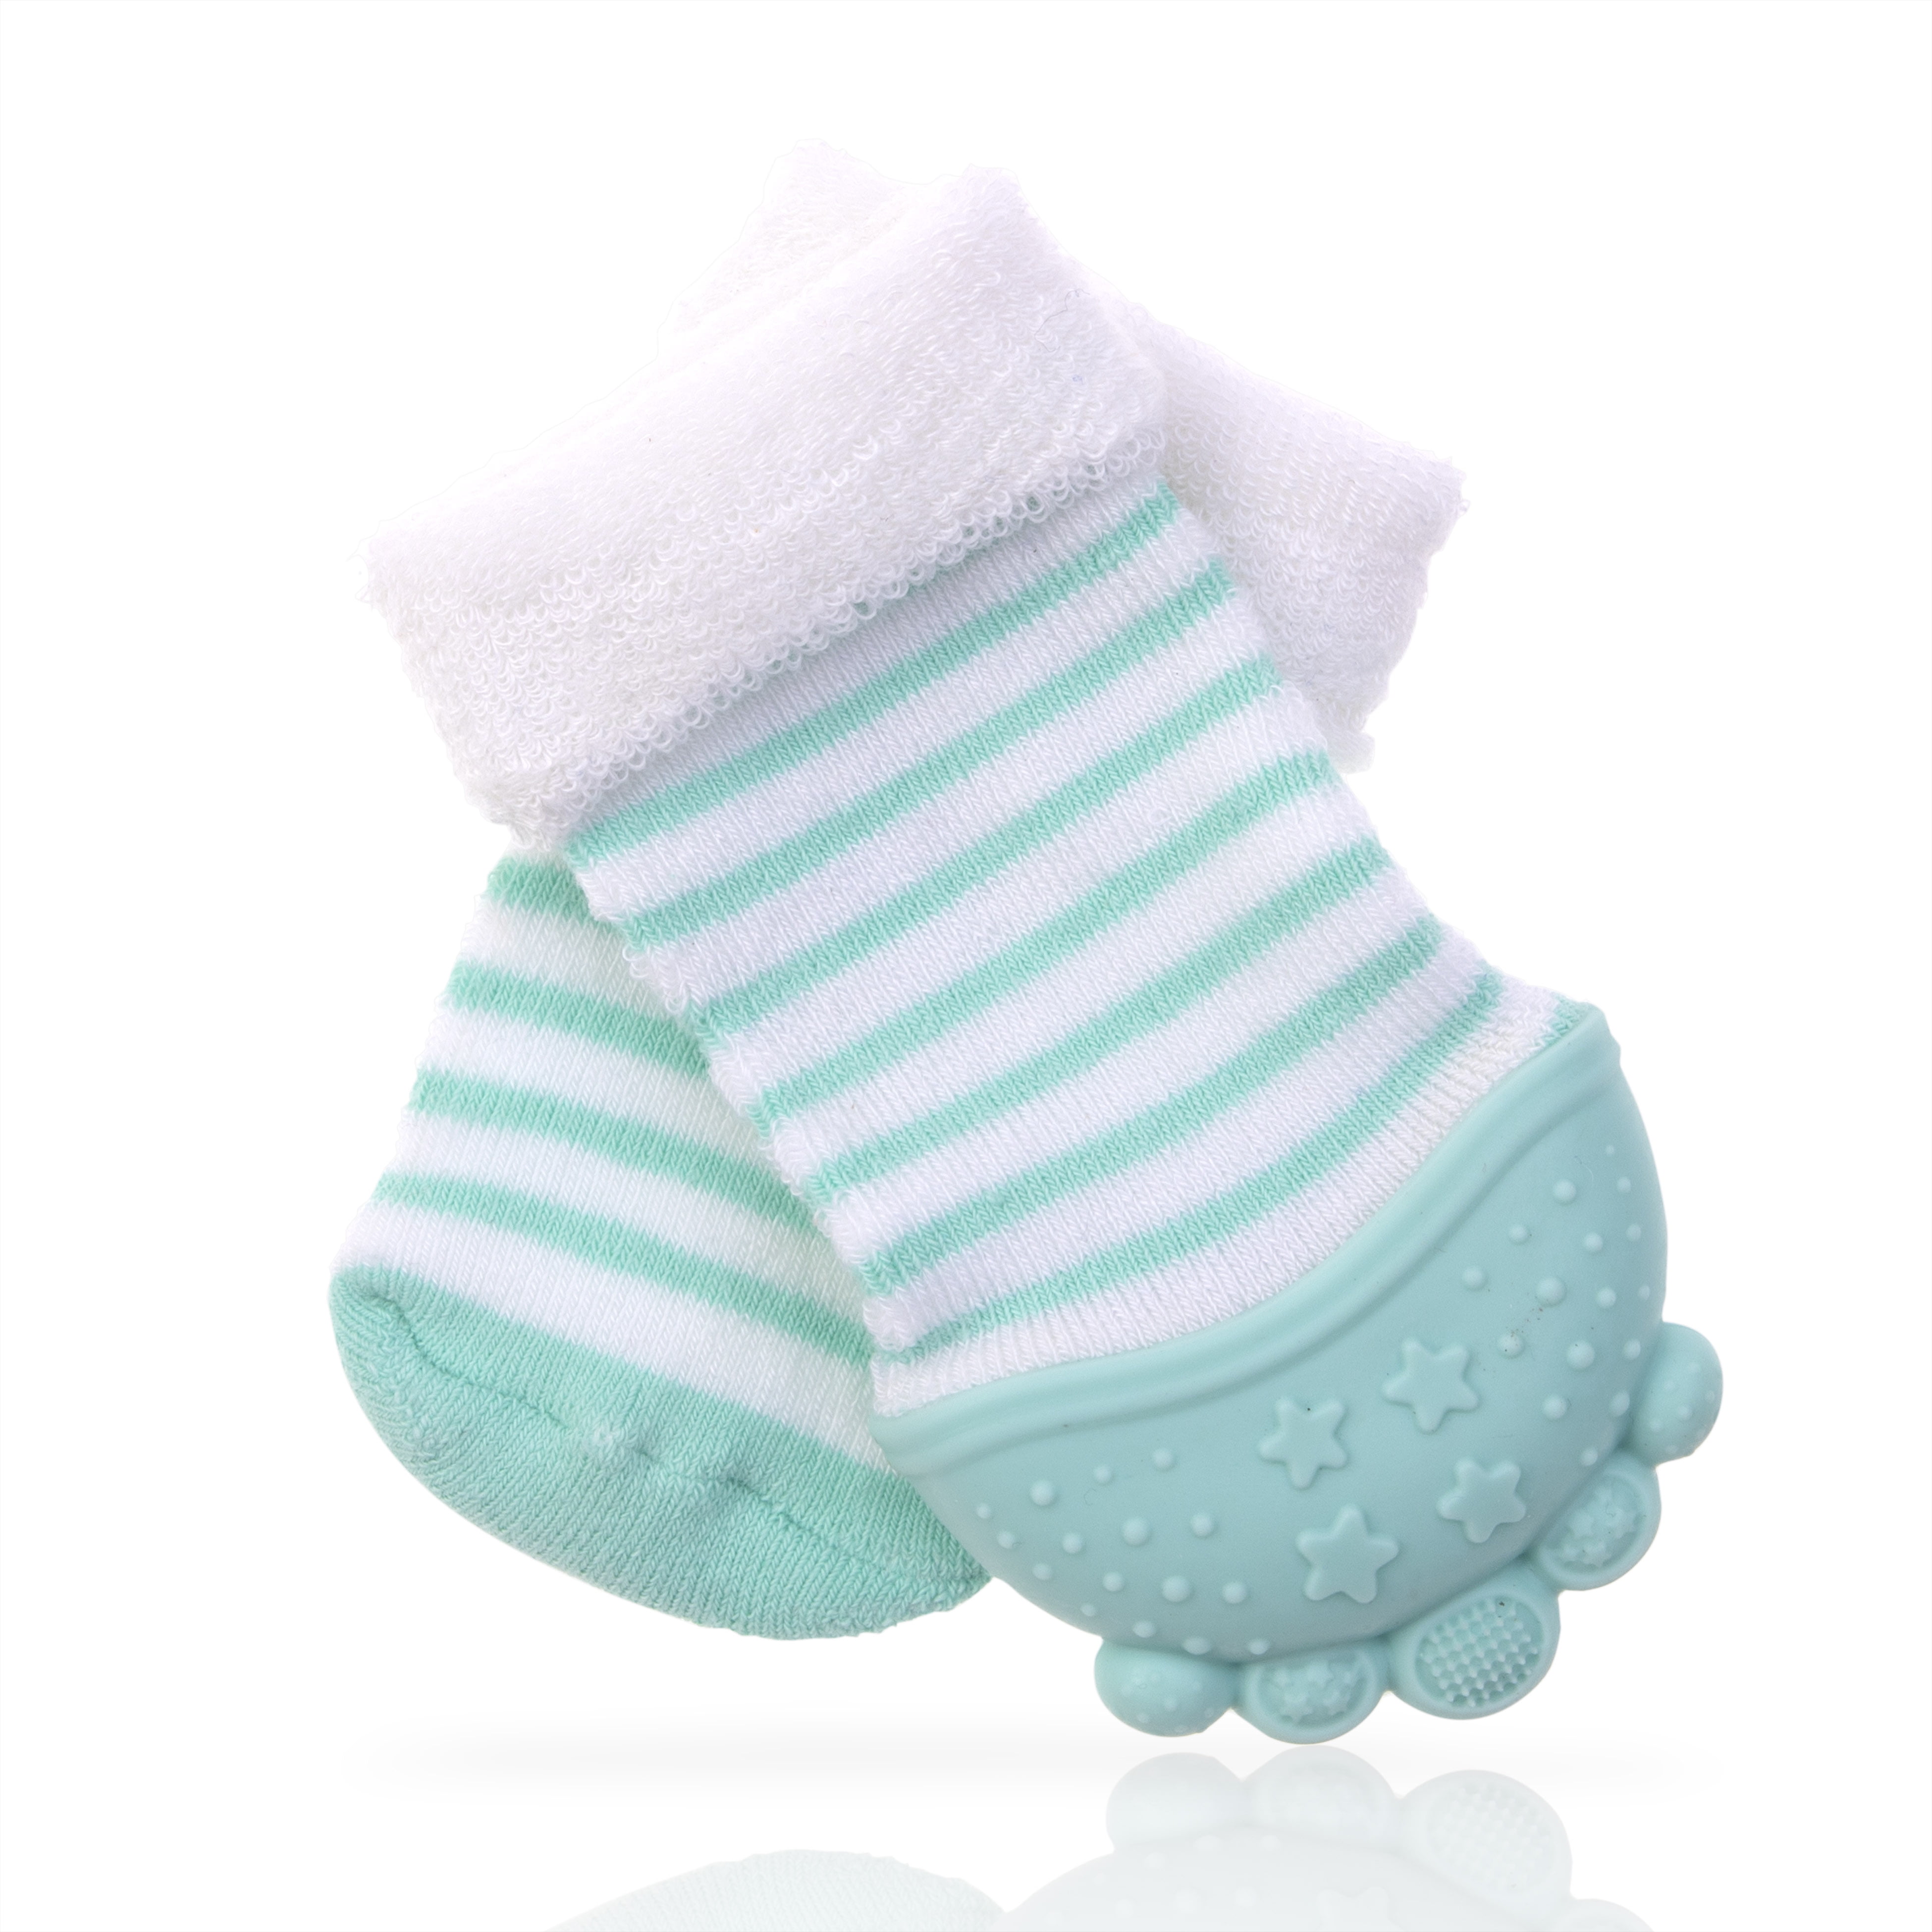 Nuby - Nuby Aqua Stripes Teething Sock 